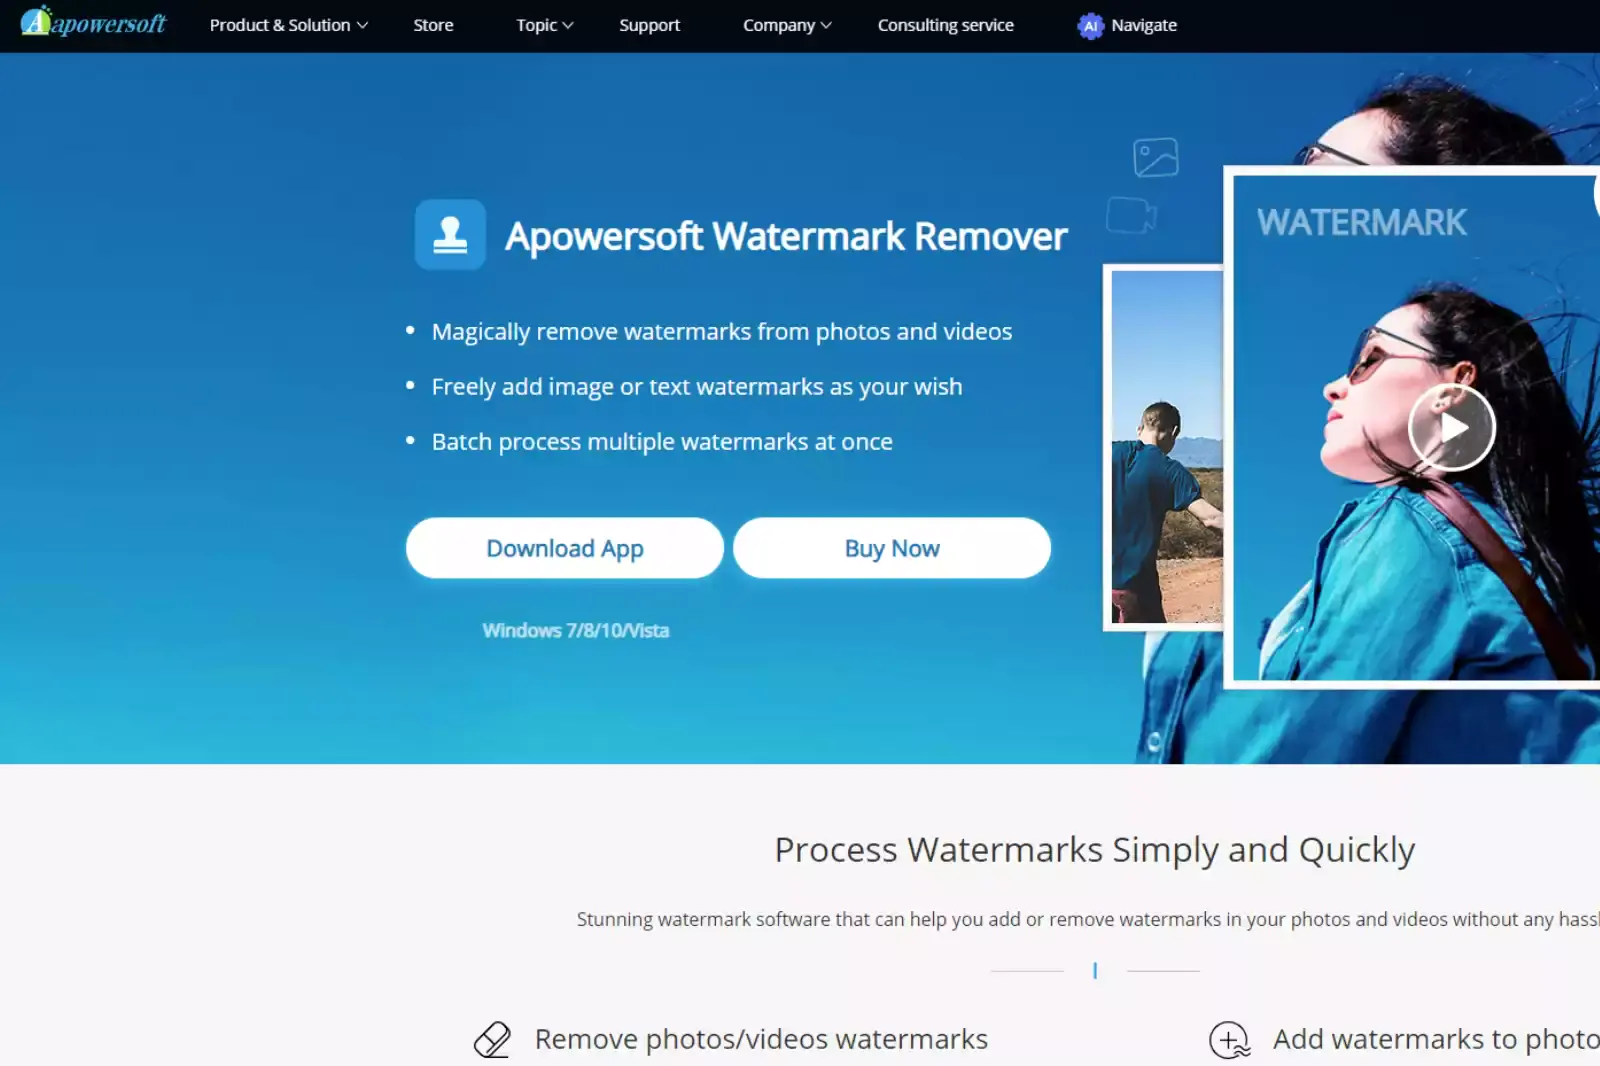 6. Apowersoft Watermark Remover